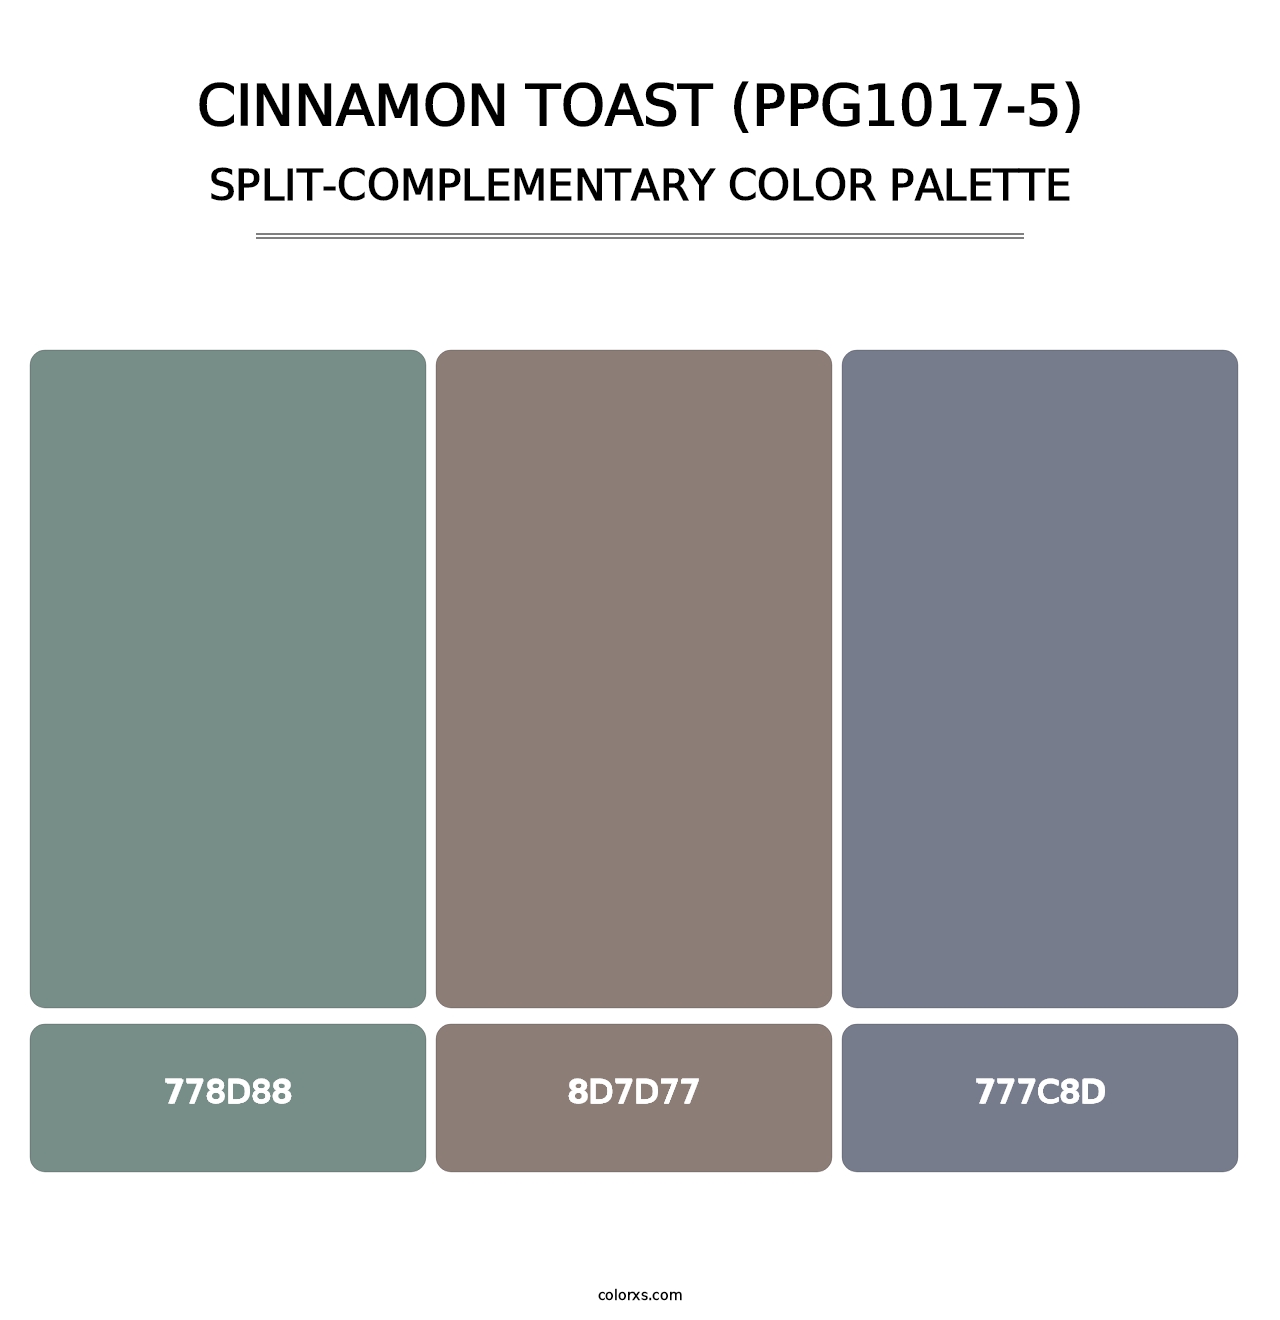 Cinnamon Toast (PPG1017-5) - Split-Complementary Color Palette